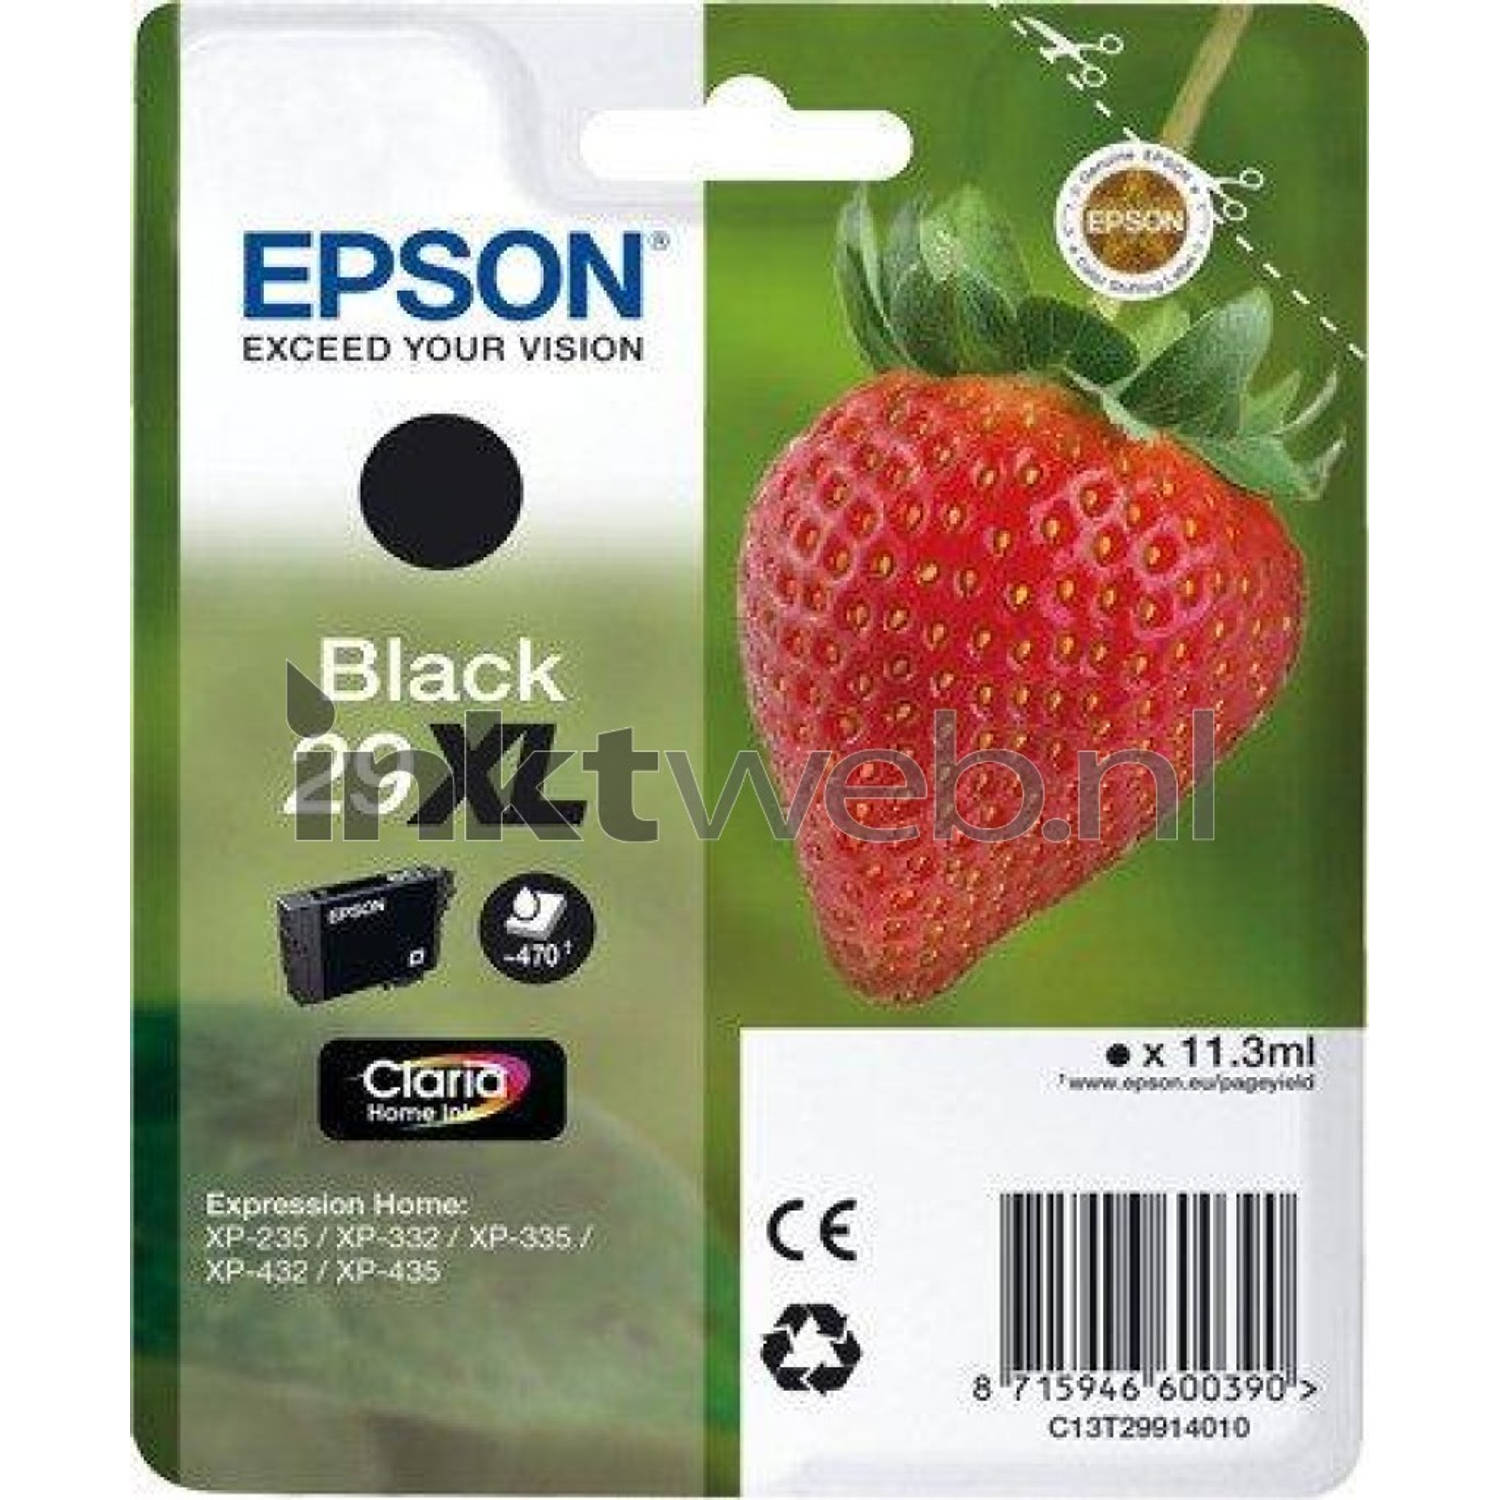 Epson 29XL zwart cartridge